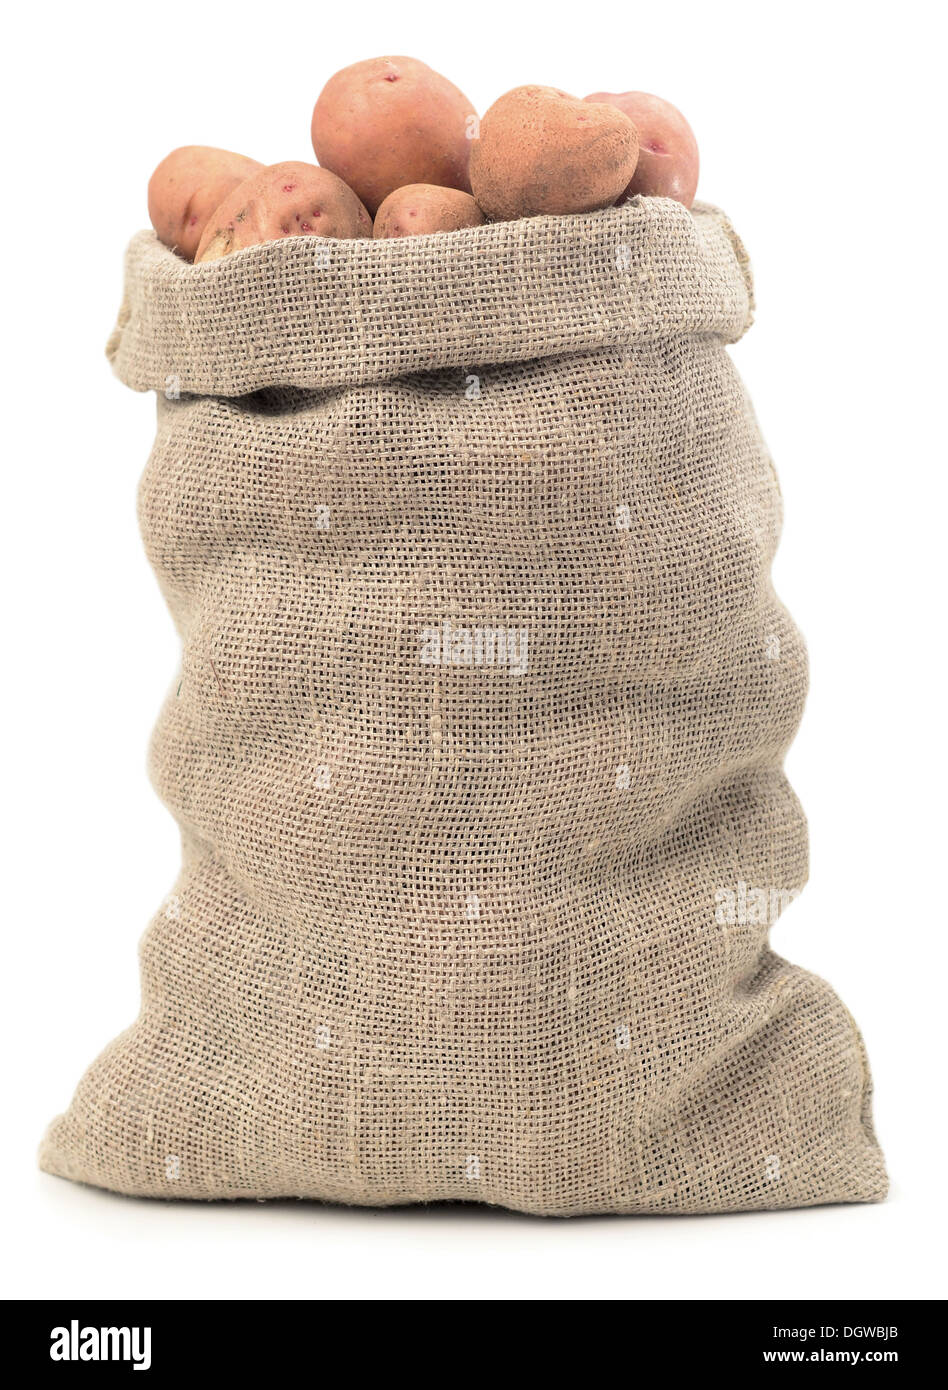 4pcs Empty Burlap Bags Potato Sacks Vegetable Storage Bags Burlap Sandbags  for | eBay